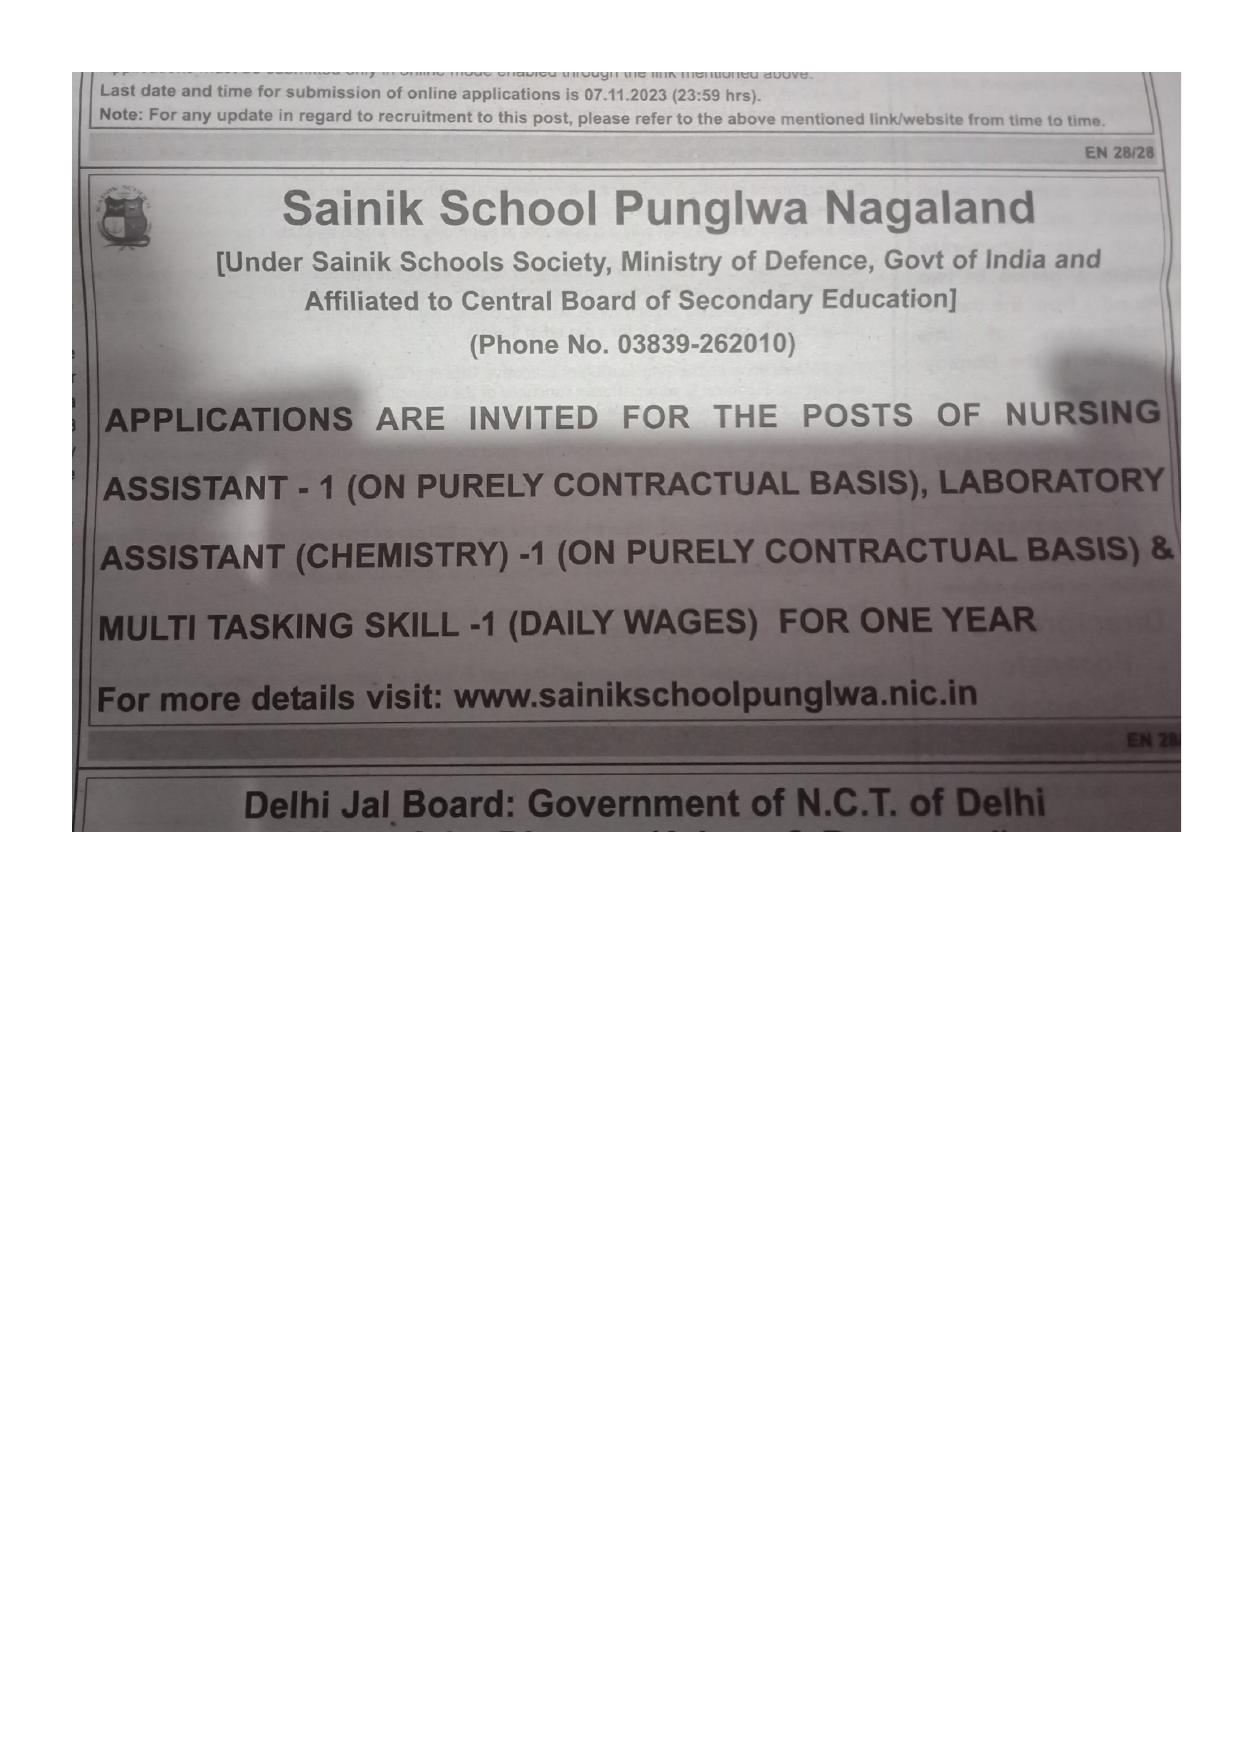 Sainik School Punglwa Nursing Assistant, Laboratory Assistant, Multi Tasking Skill Recruitment 2023 - Page 1